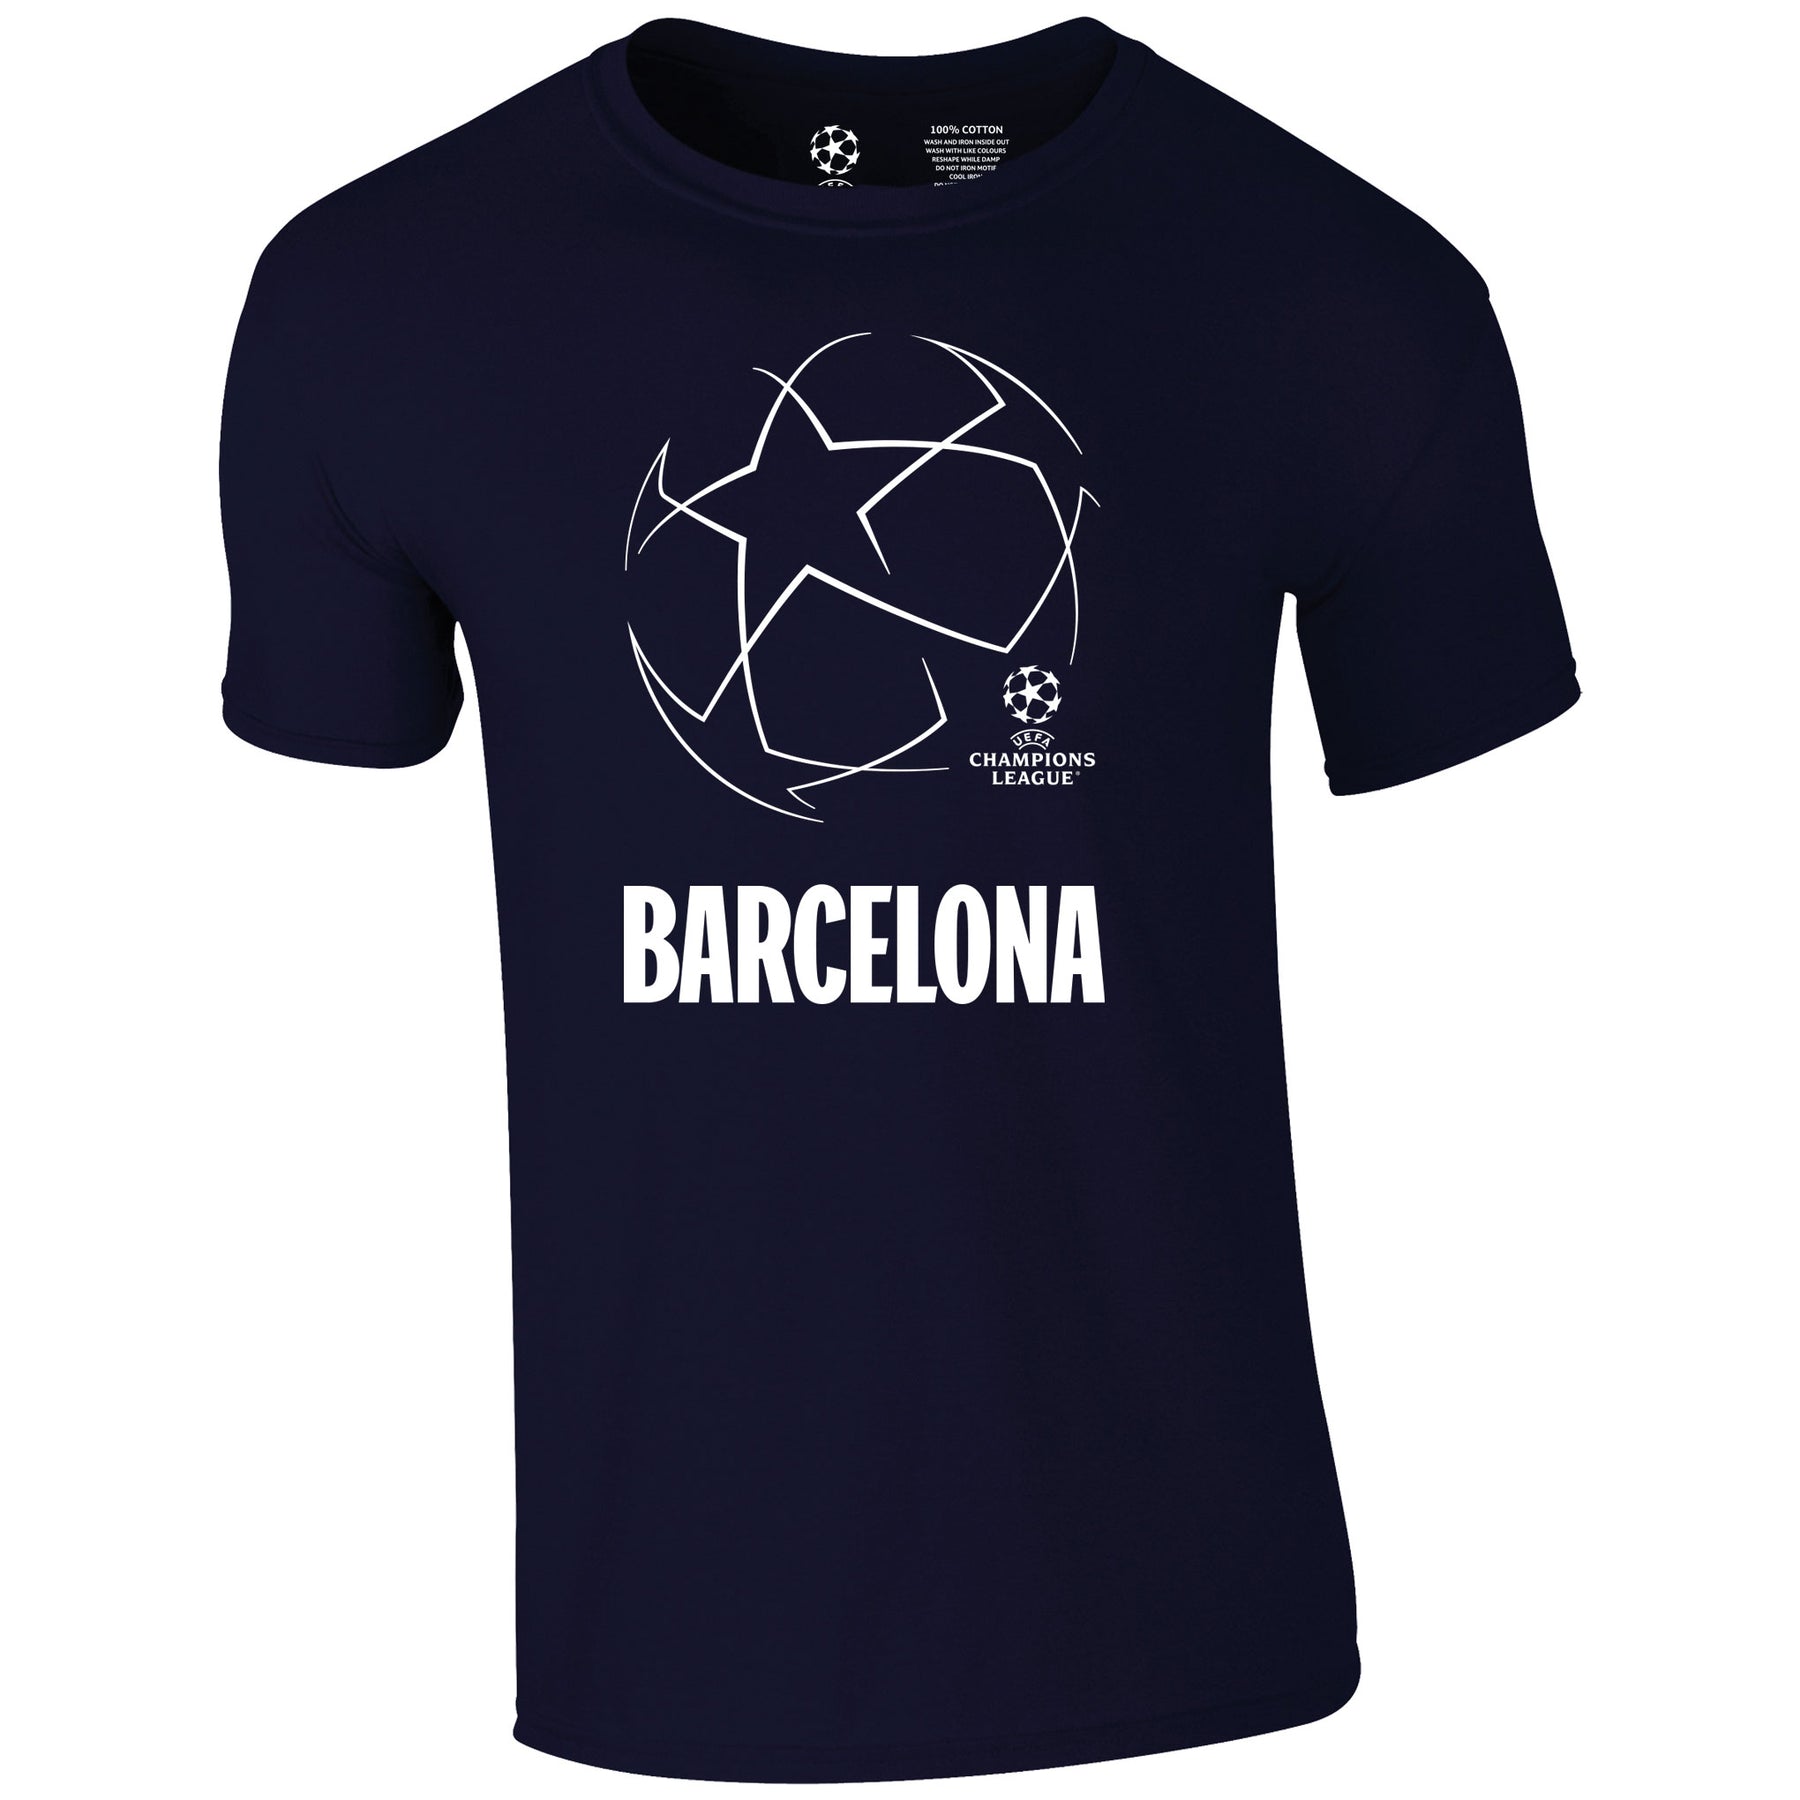 Champions League Starball Barcelona City T-Shirt Navy